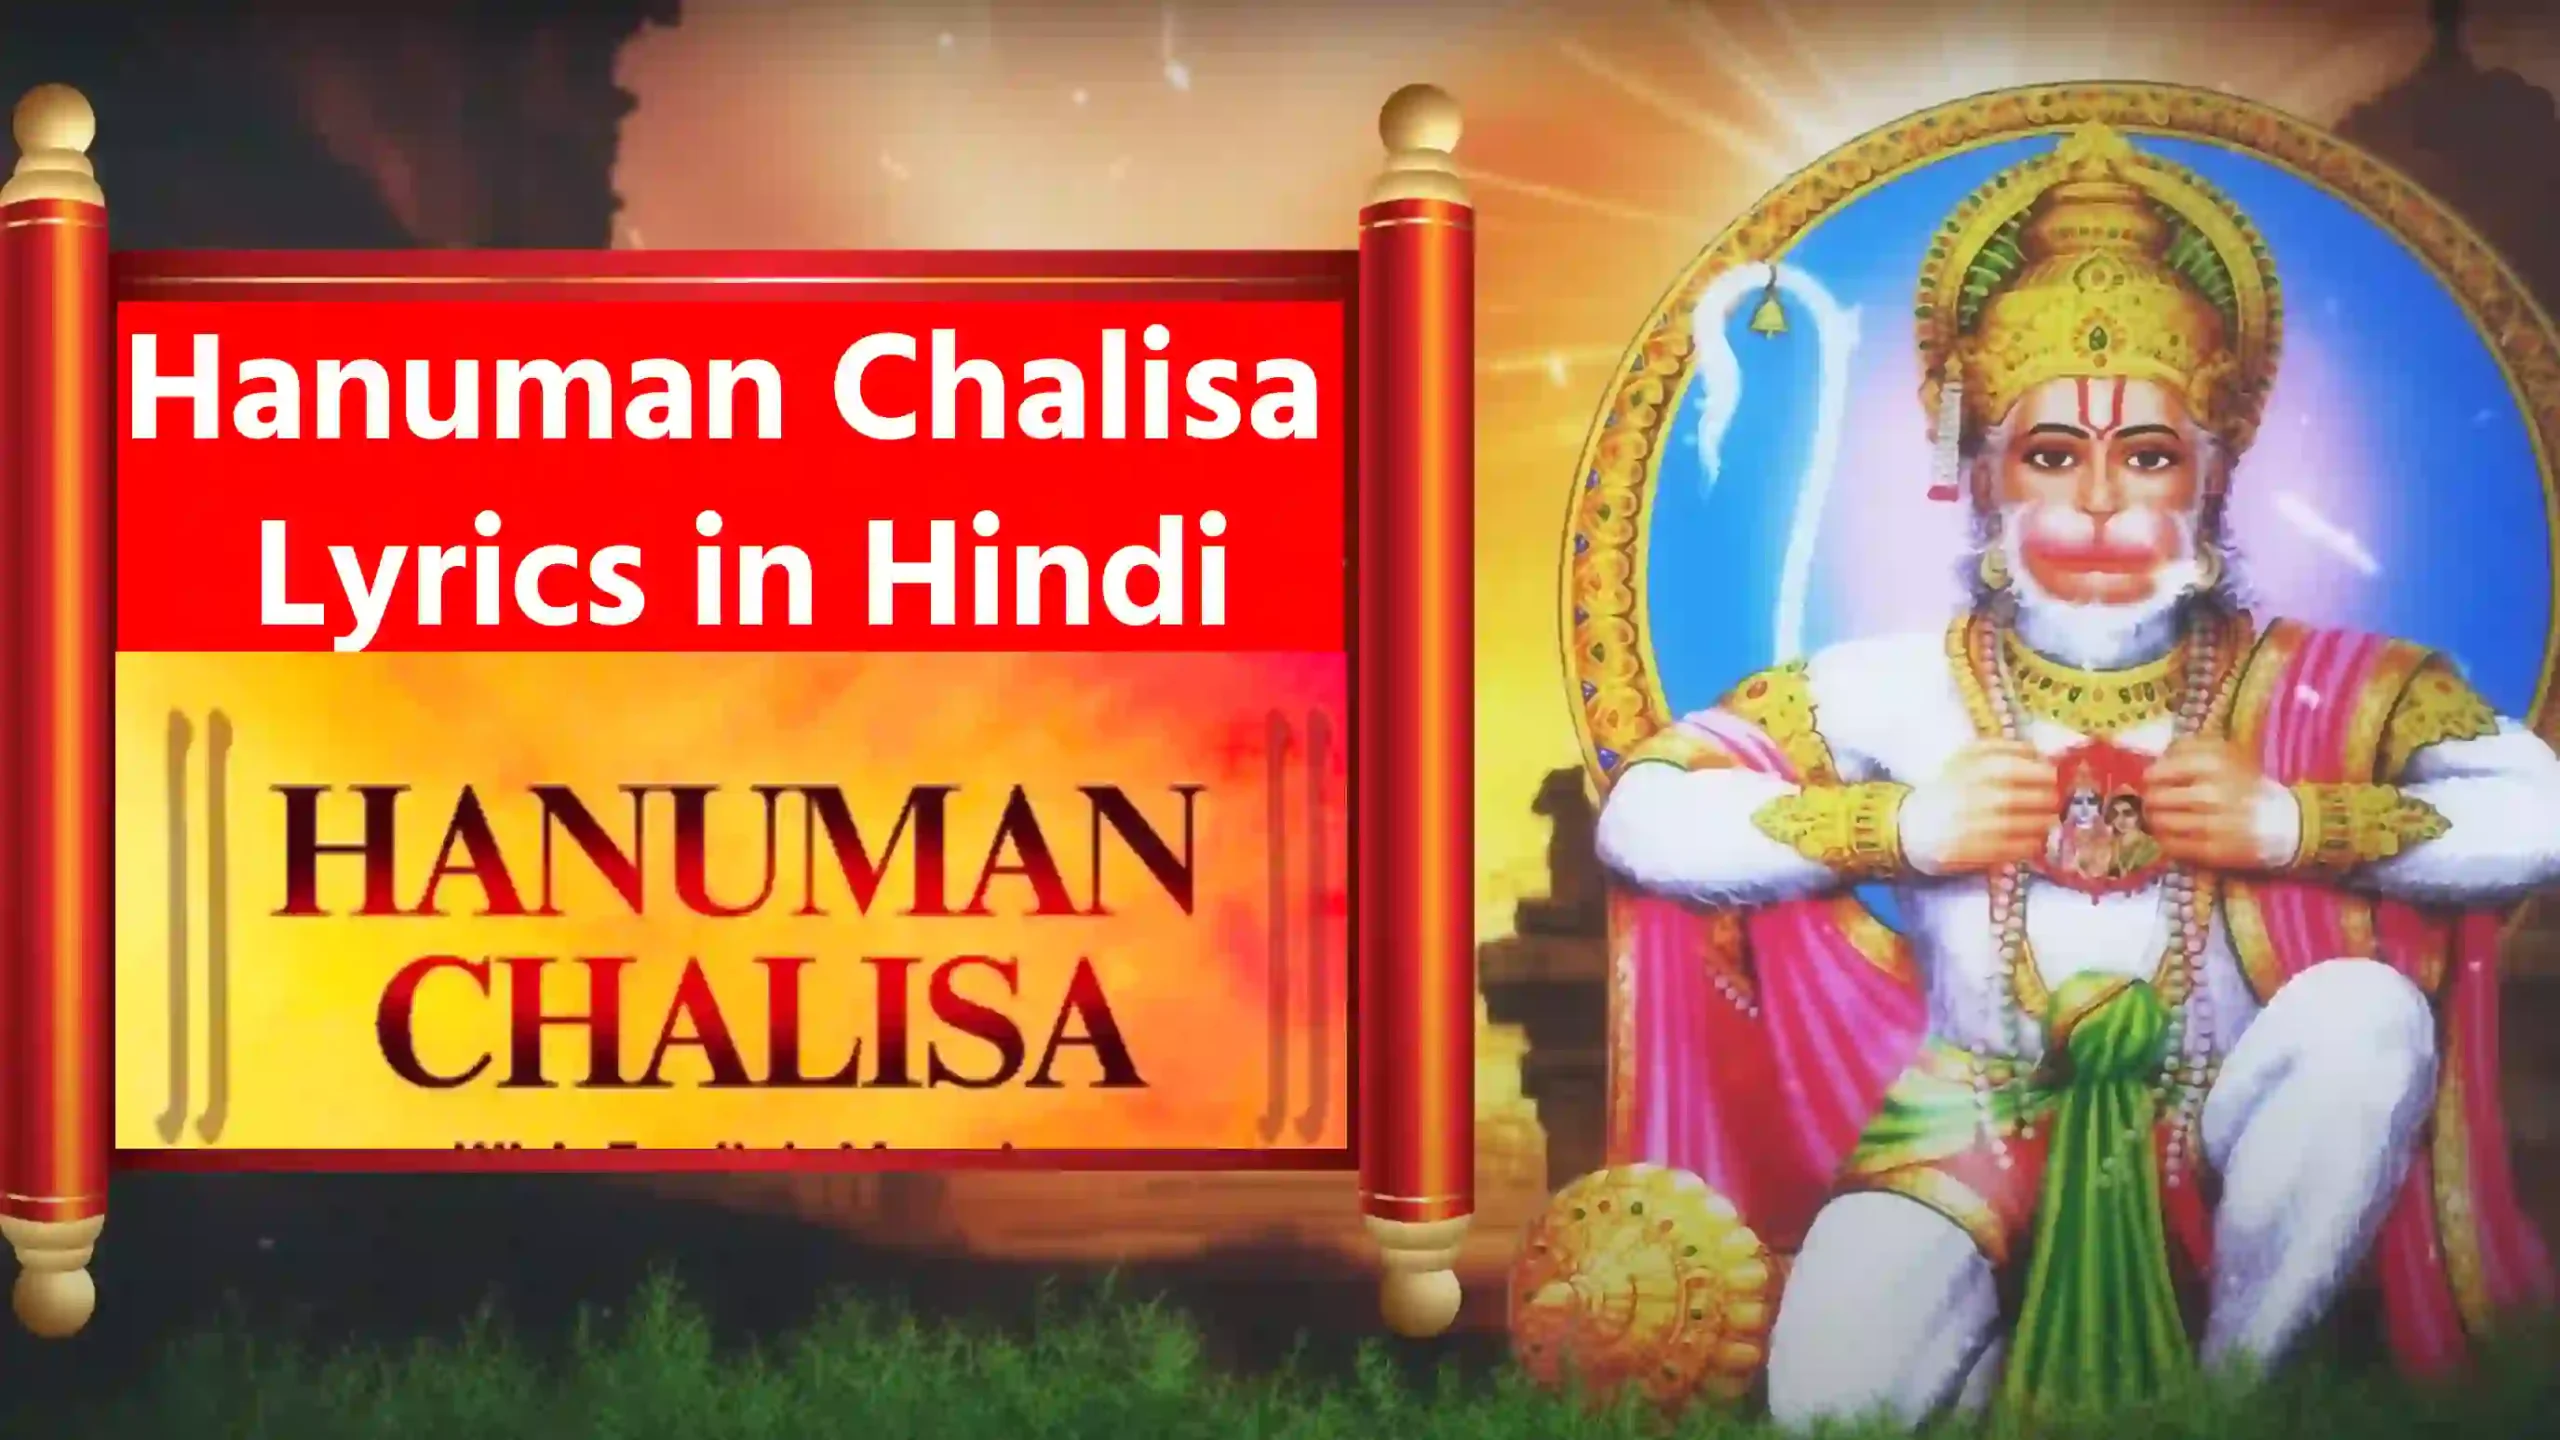 हनुमान चालीसा हिंदी में - Hanuman Chalisa Lyrics in Hindi